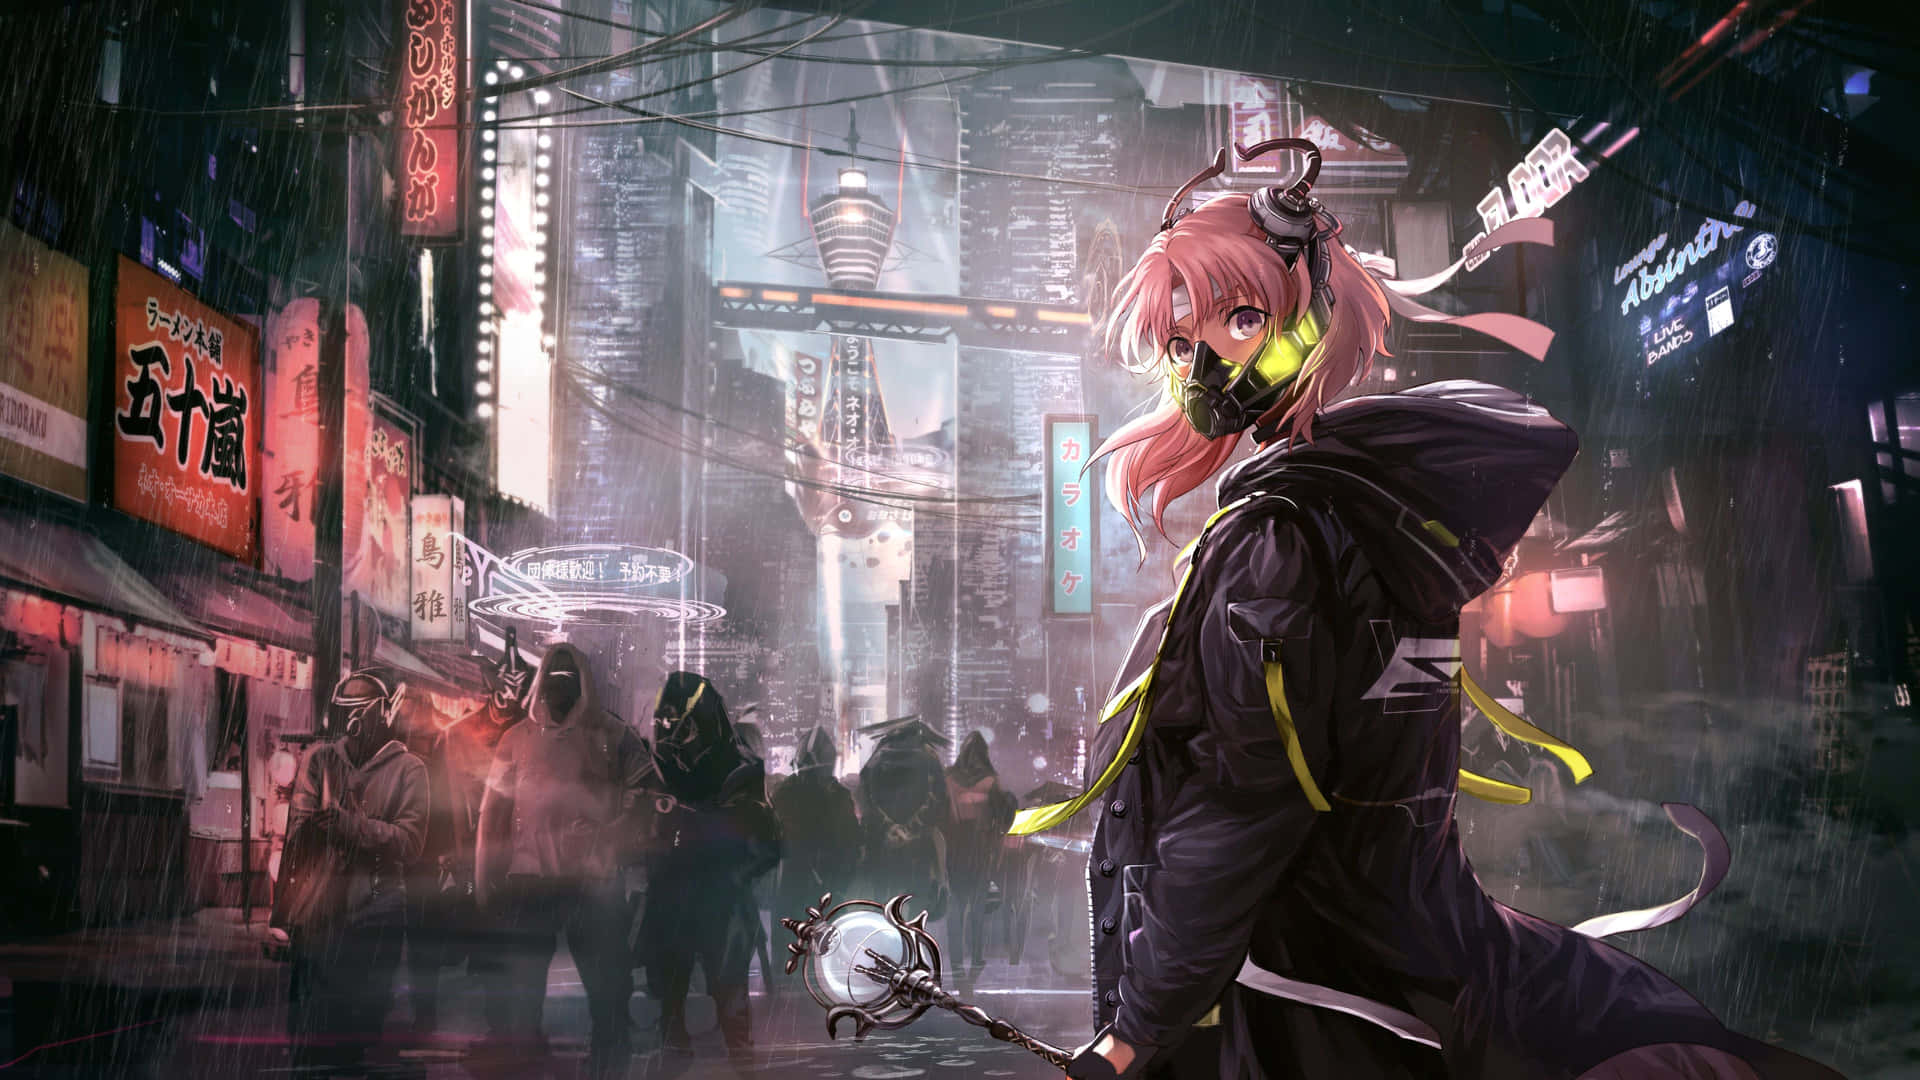 Cyberpunk Anime Girlin Rainy Cityscape Wallpaper